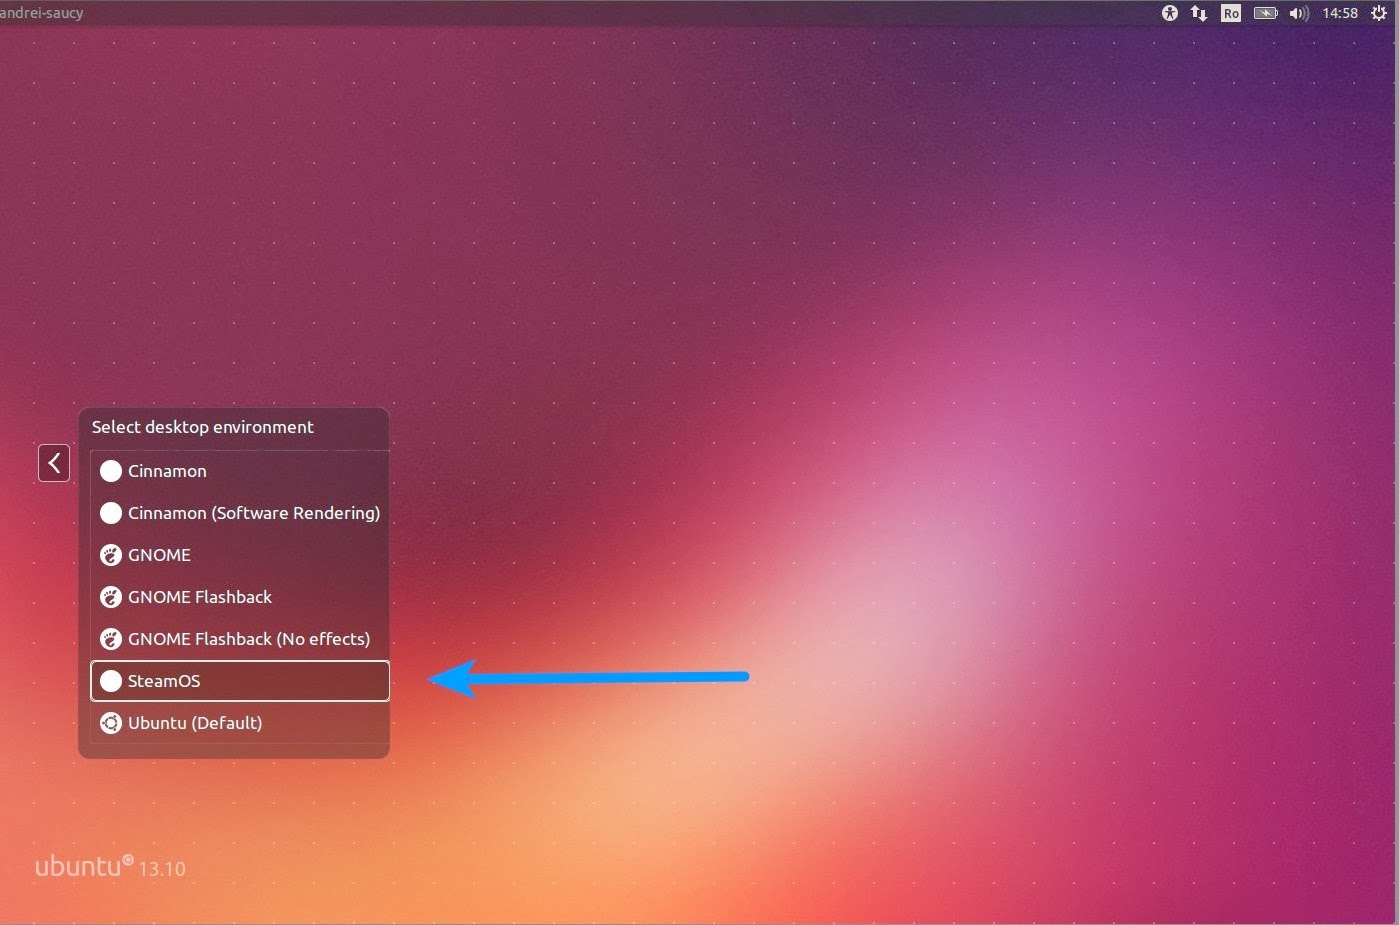 steam ubuntu download